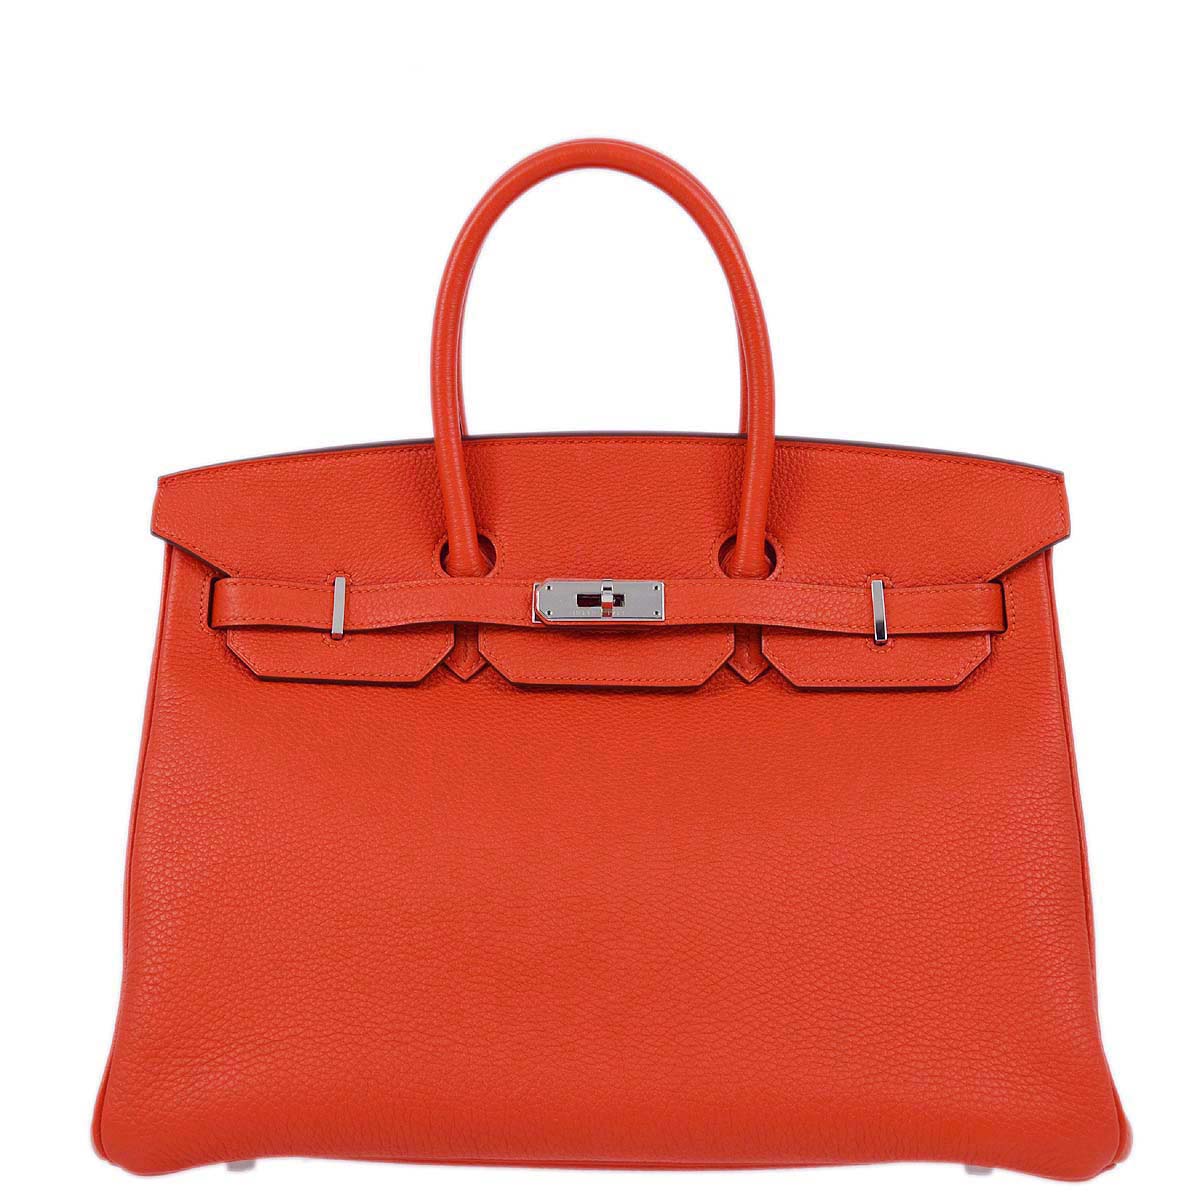 Hermes Red Togo Birkin 35 Handbag